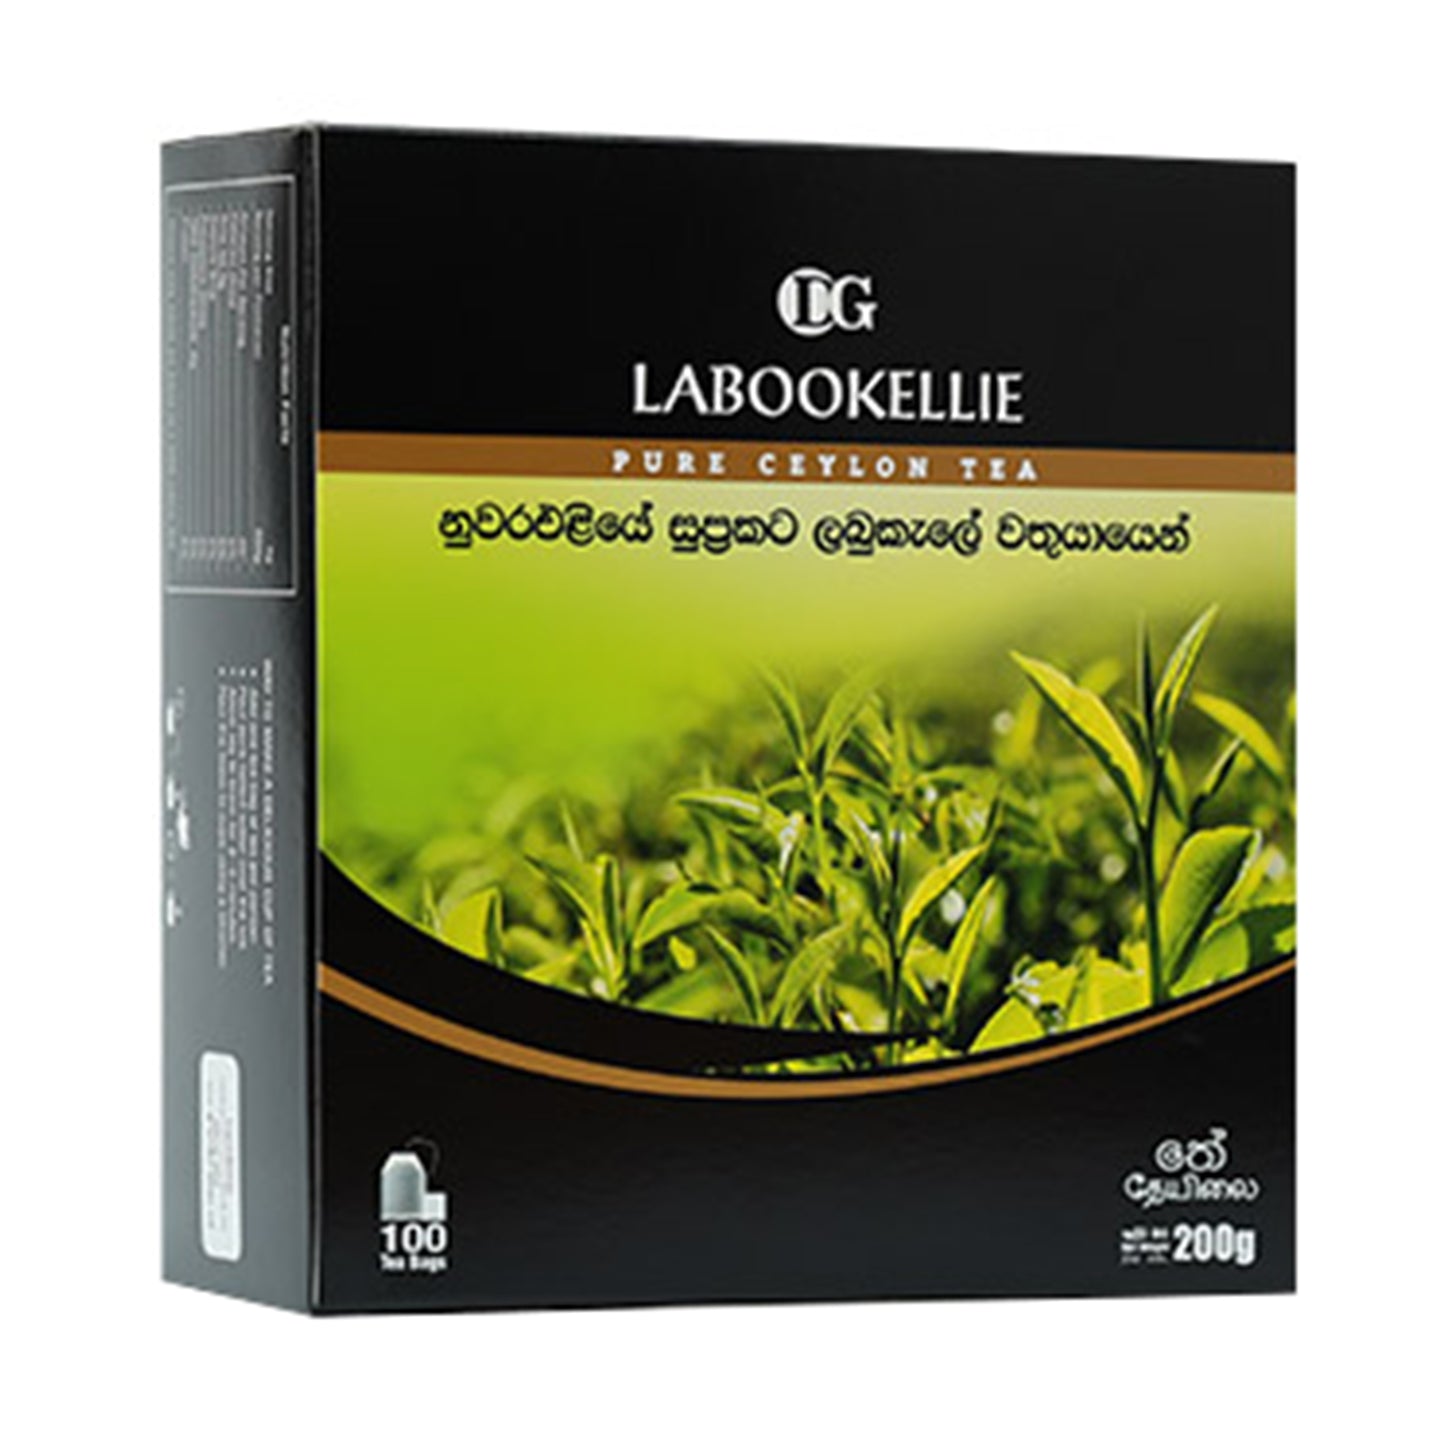 DG Labookellie Ceylon zwarte thee (200 g) 100 theezakjes